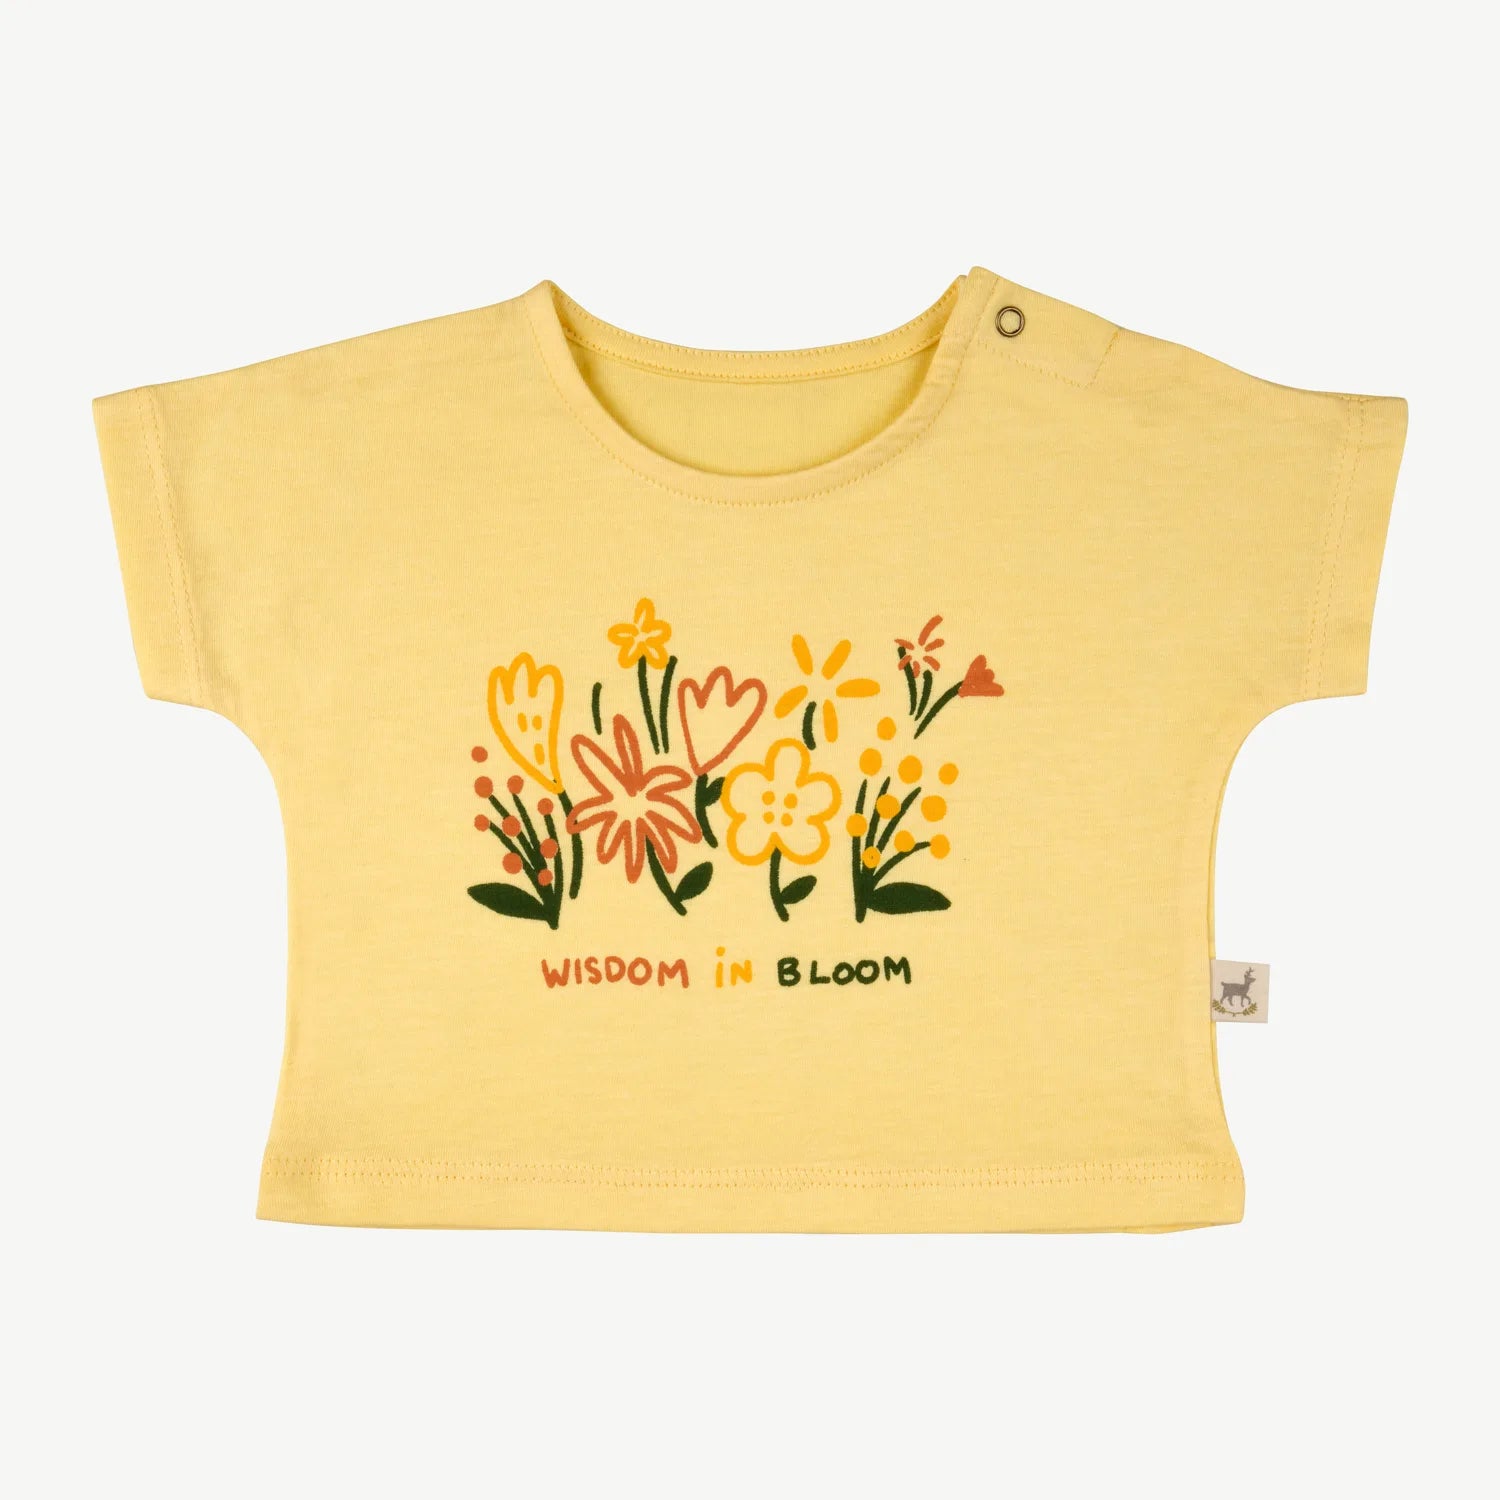 wisdom in bloom' sundress short sleeve t-shirt